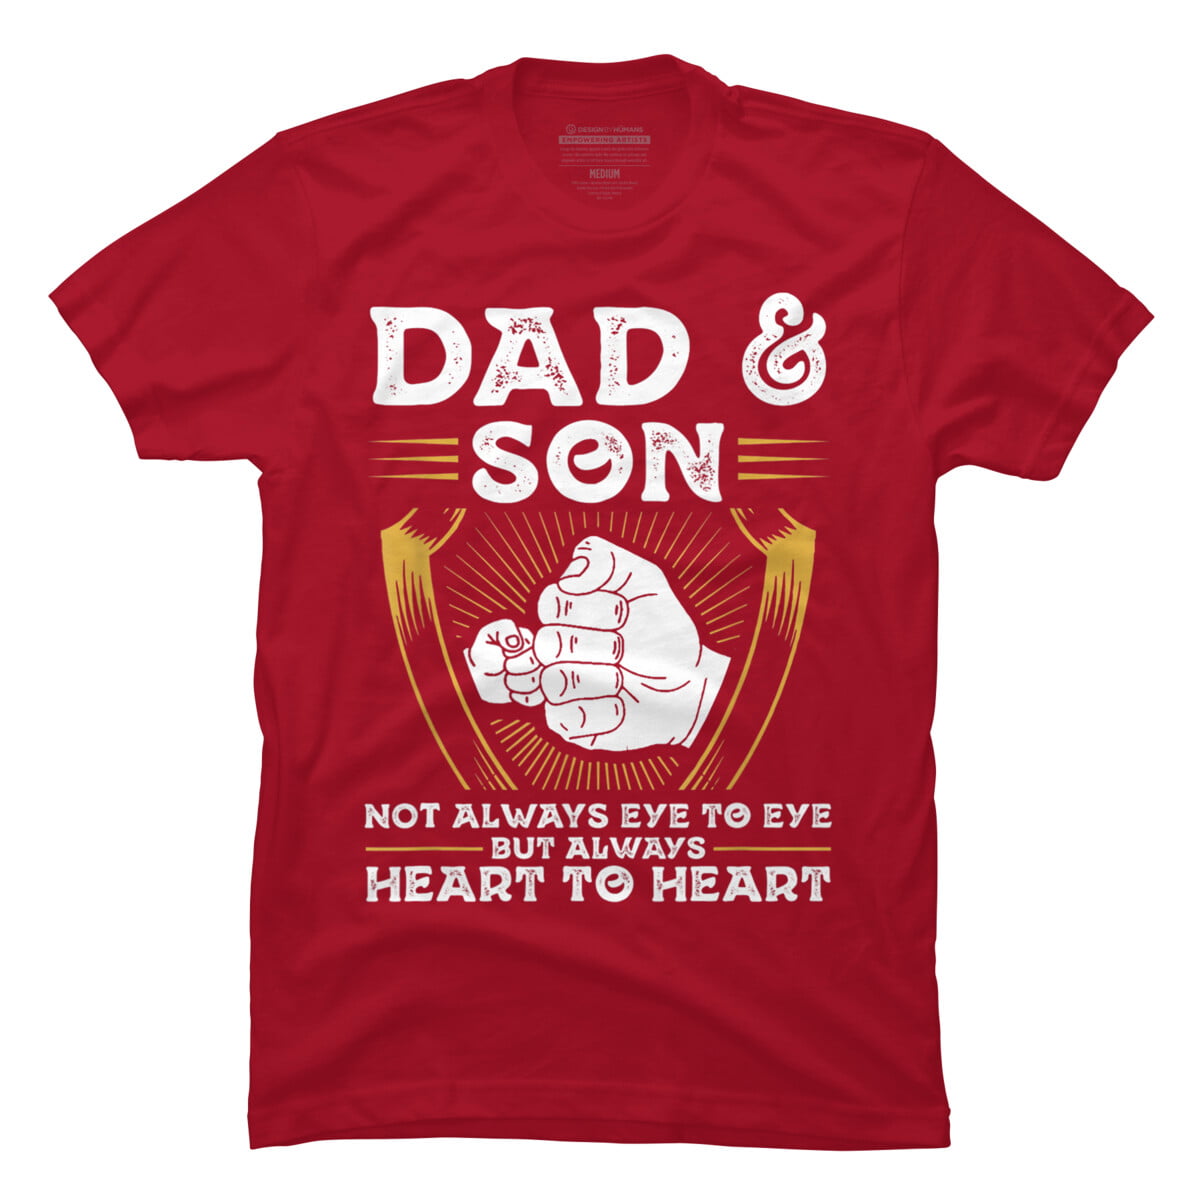 dad son printed t shirts | father son t shirt from gfashion – GFASHION